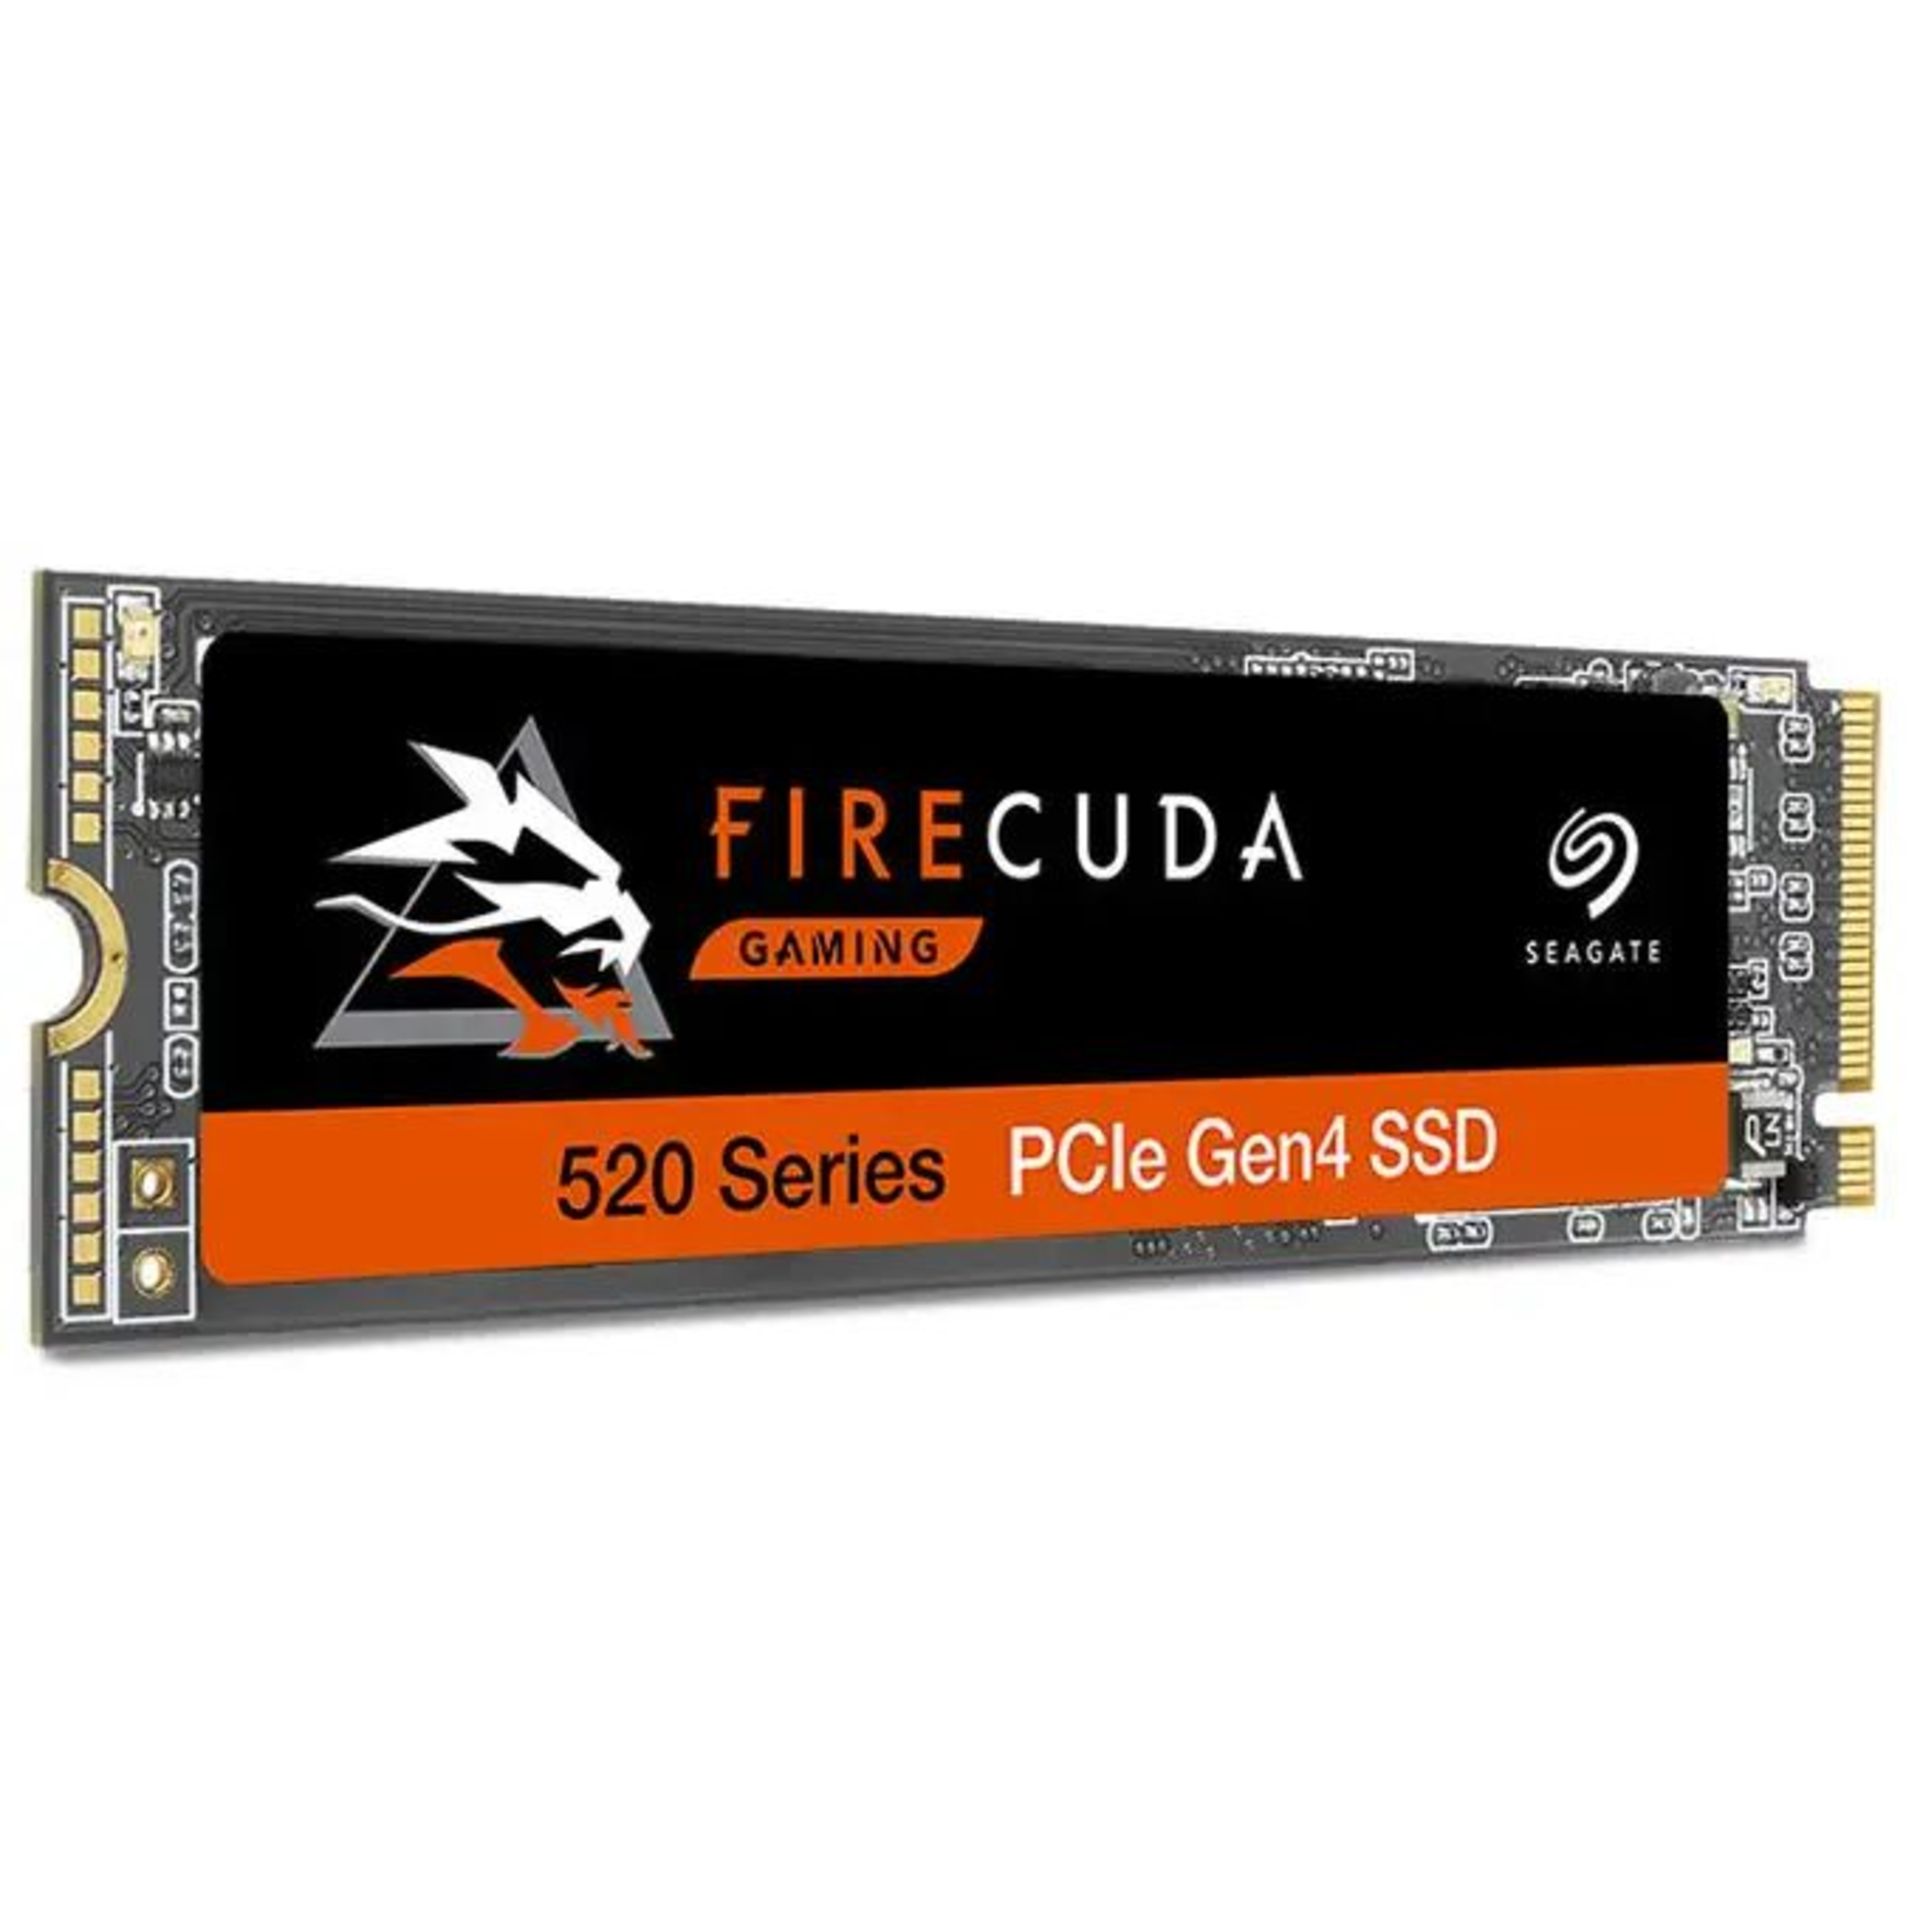 Seagate FireCuda 520 2TB M.2 PCIe Gen4 NVMe SSD Internal Solid State Hard Drive. -P6. RRP £319.99.